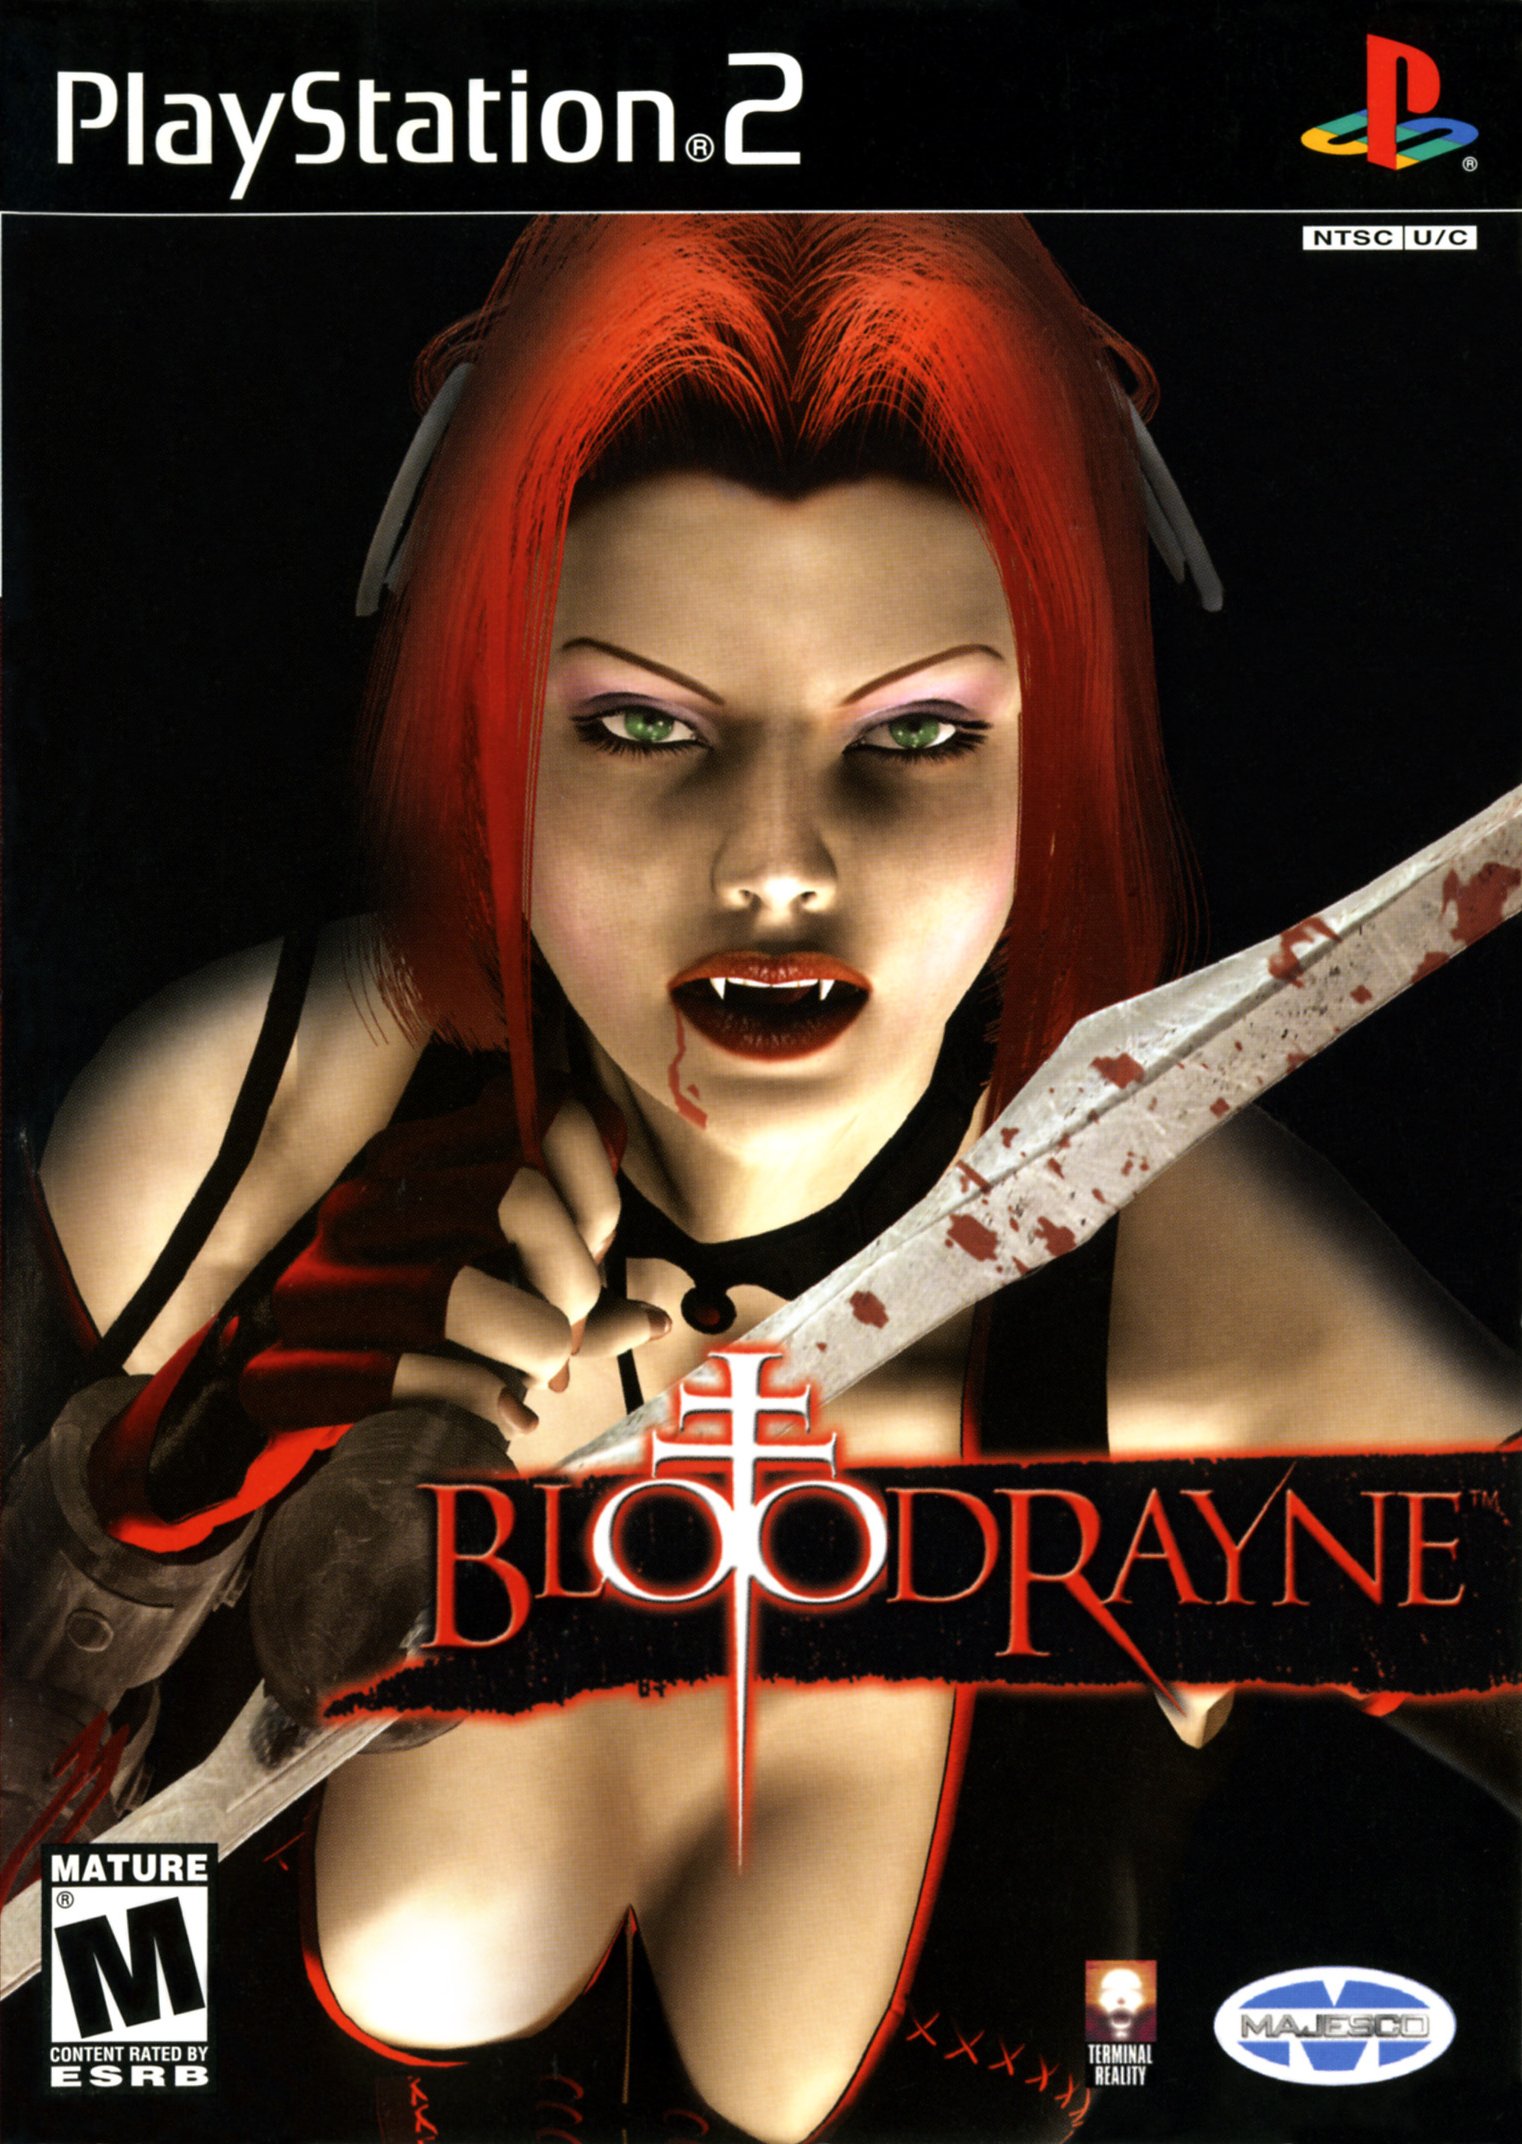 Bloodrayne/PS2